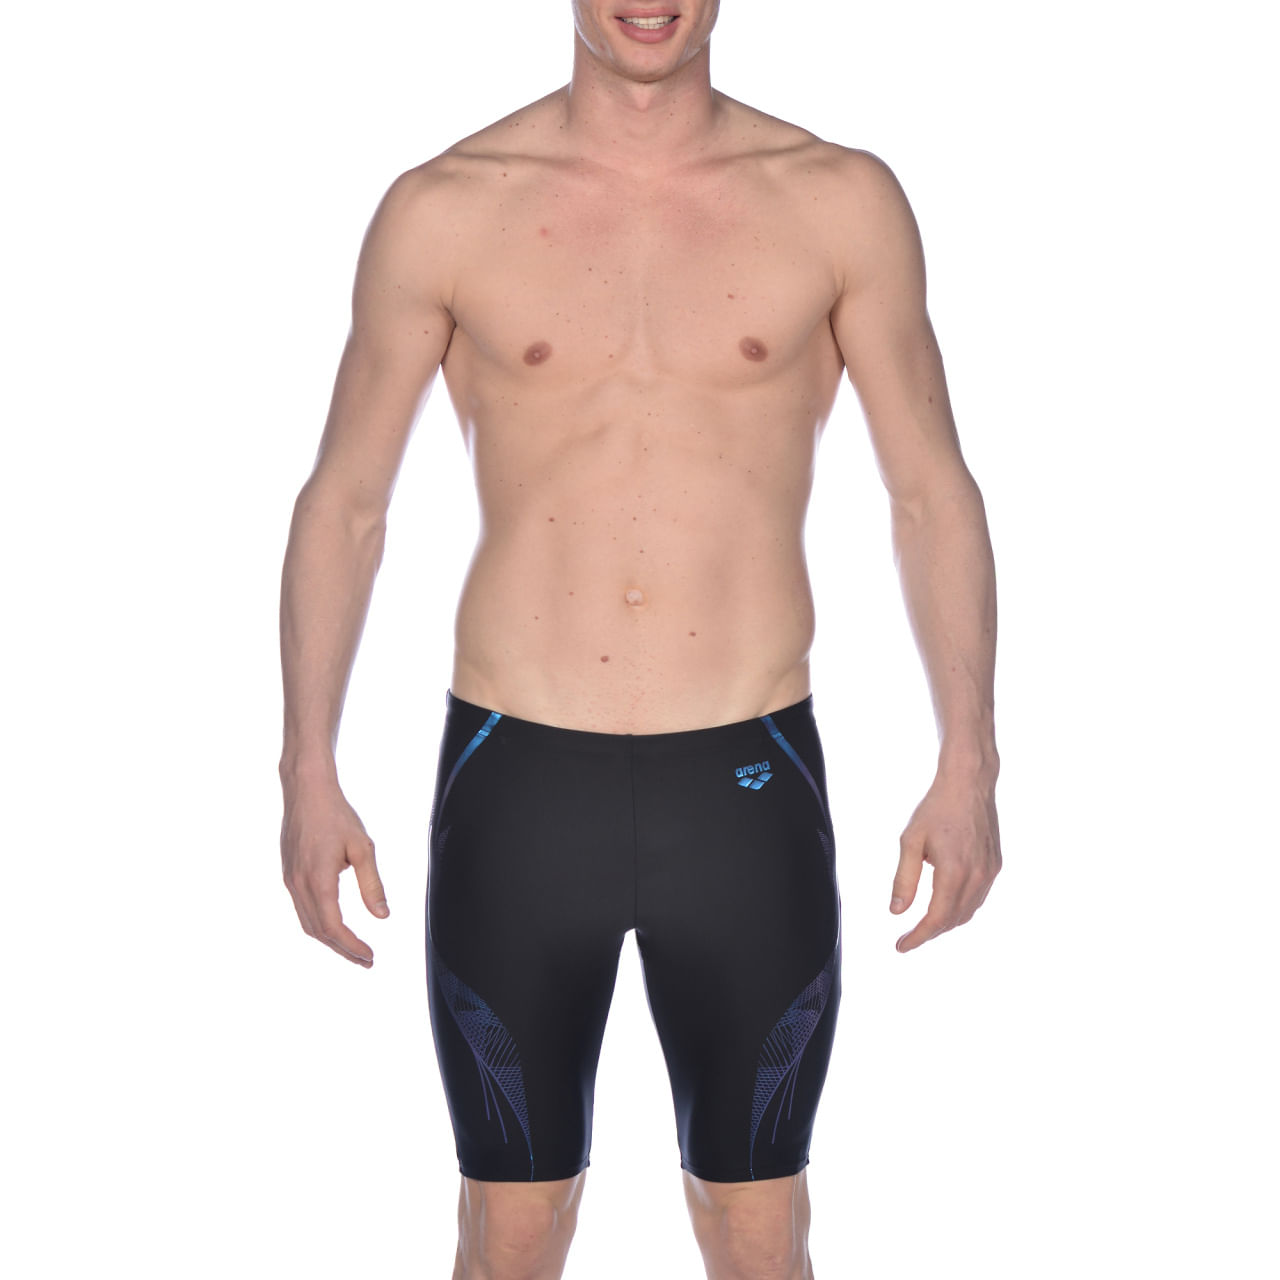 Arena jammer. Джаммеры Арена. Speedo men's static Boom Jammer Swimsuit(7705910) Размерная сетка. NW Skin ext man Jammer. Джаммеры Арена купить.